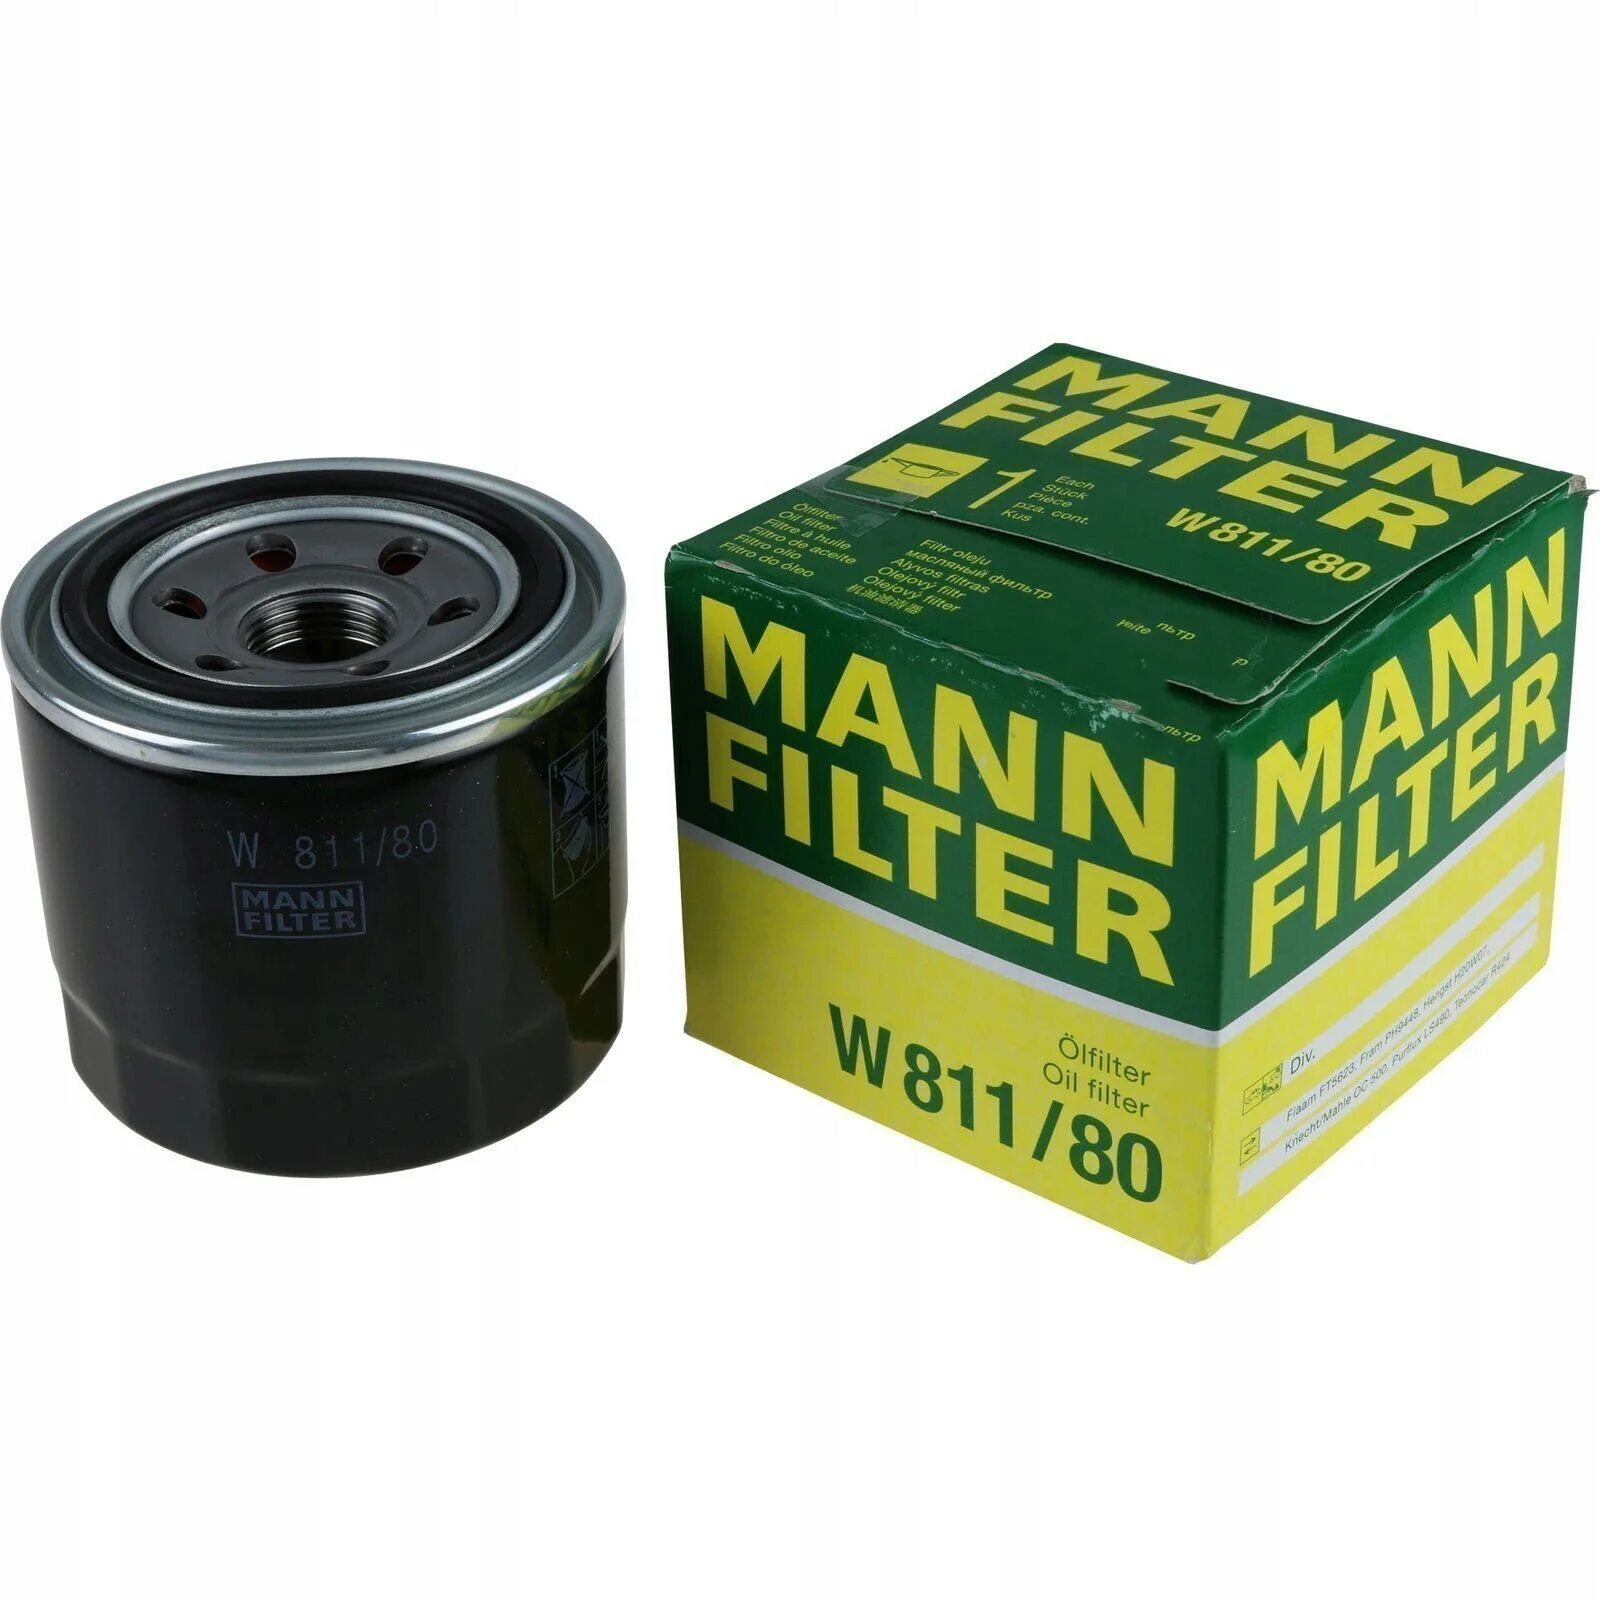 Mann фильтр оригинал. Фильтр масляный Mann w 811/80. Фильтр Манн w811/80 Применяемость масляный. W81180 масляный фильтр (Mann-Filter). Фильтр масляный Mann w811/80 Хендай Солярис.